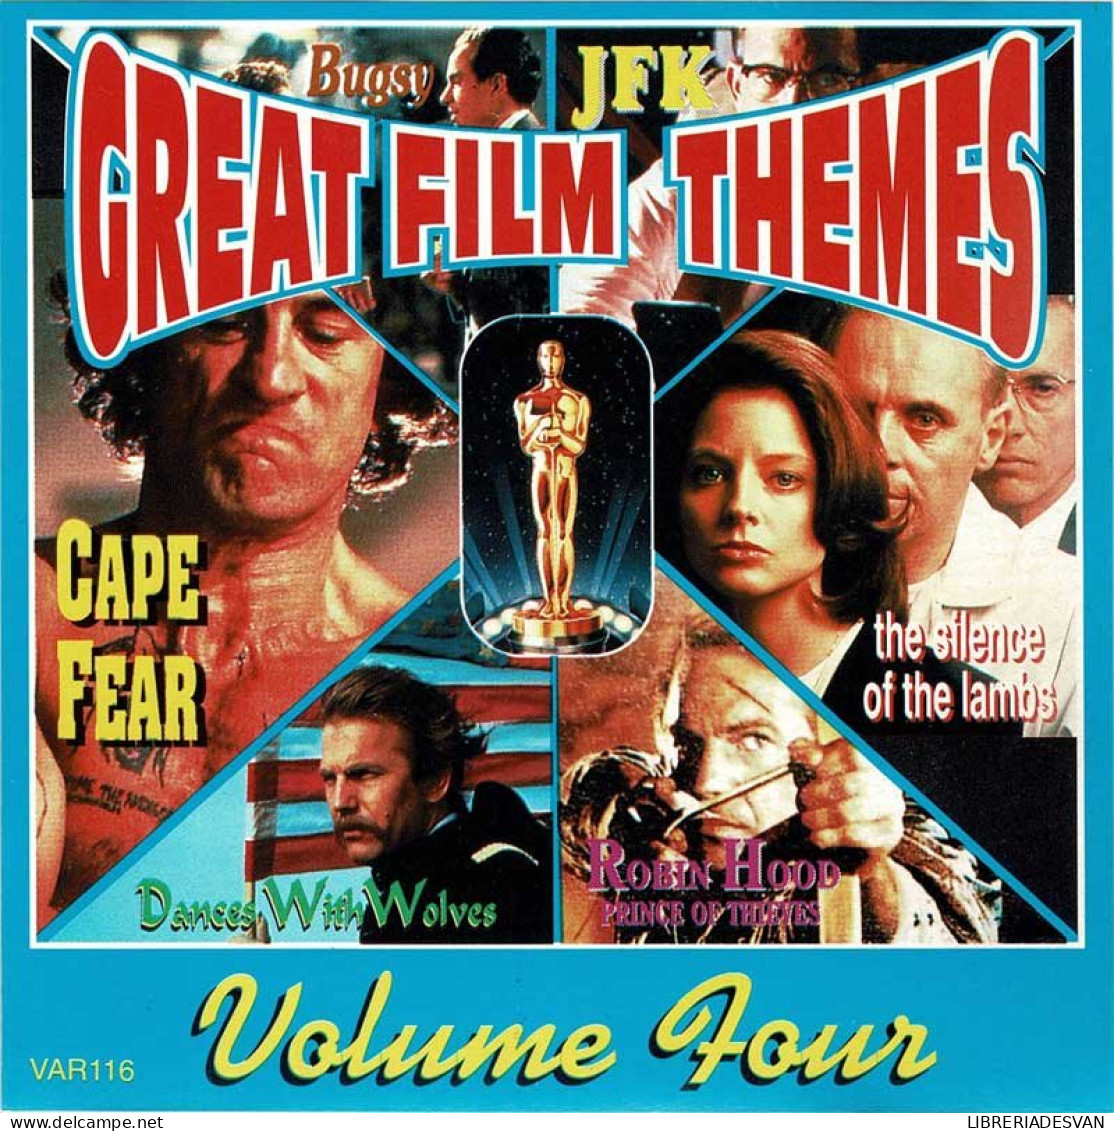 Great Film Themes Volume Four. CD - Filmmuziek